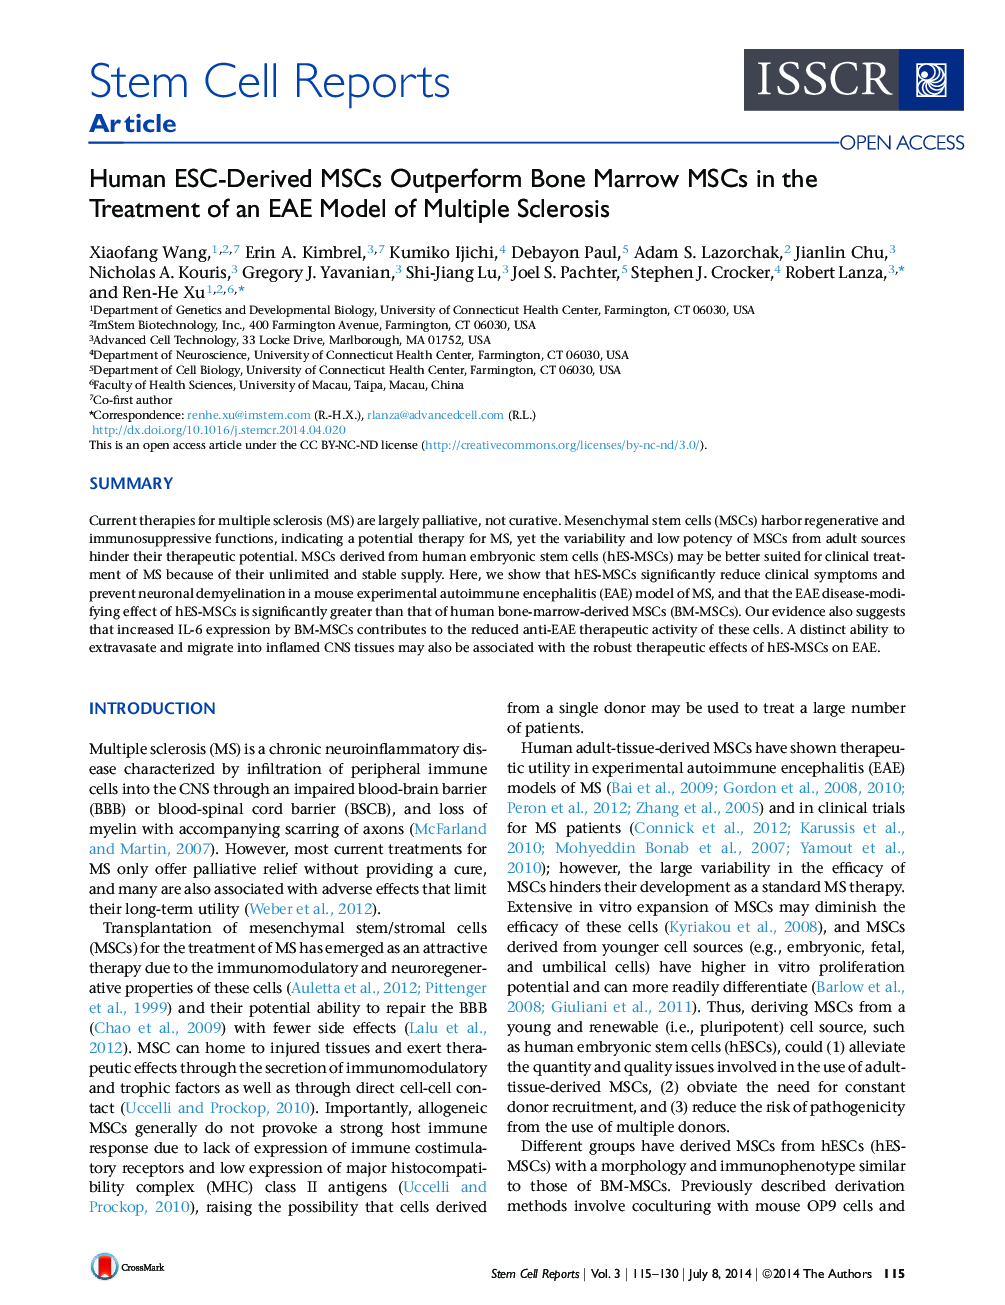 Human ESC-Derived MSCs Outperform Bone Marrow MSCs in the Treatment of an EAE Model of Multiple Sclerosis 